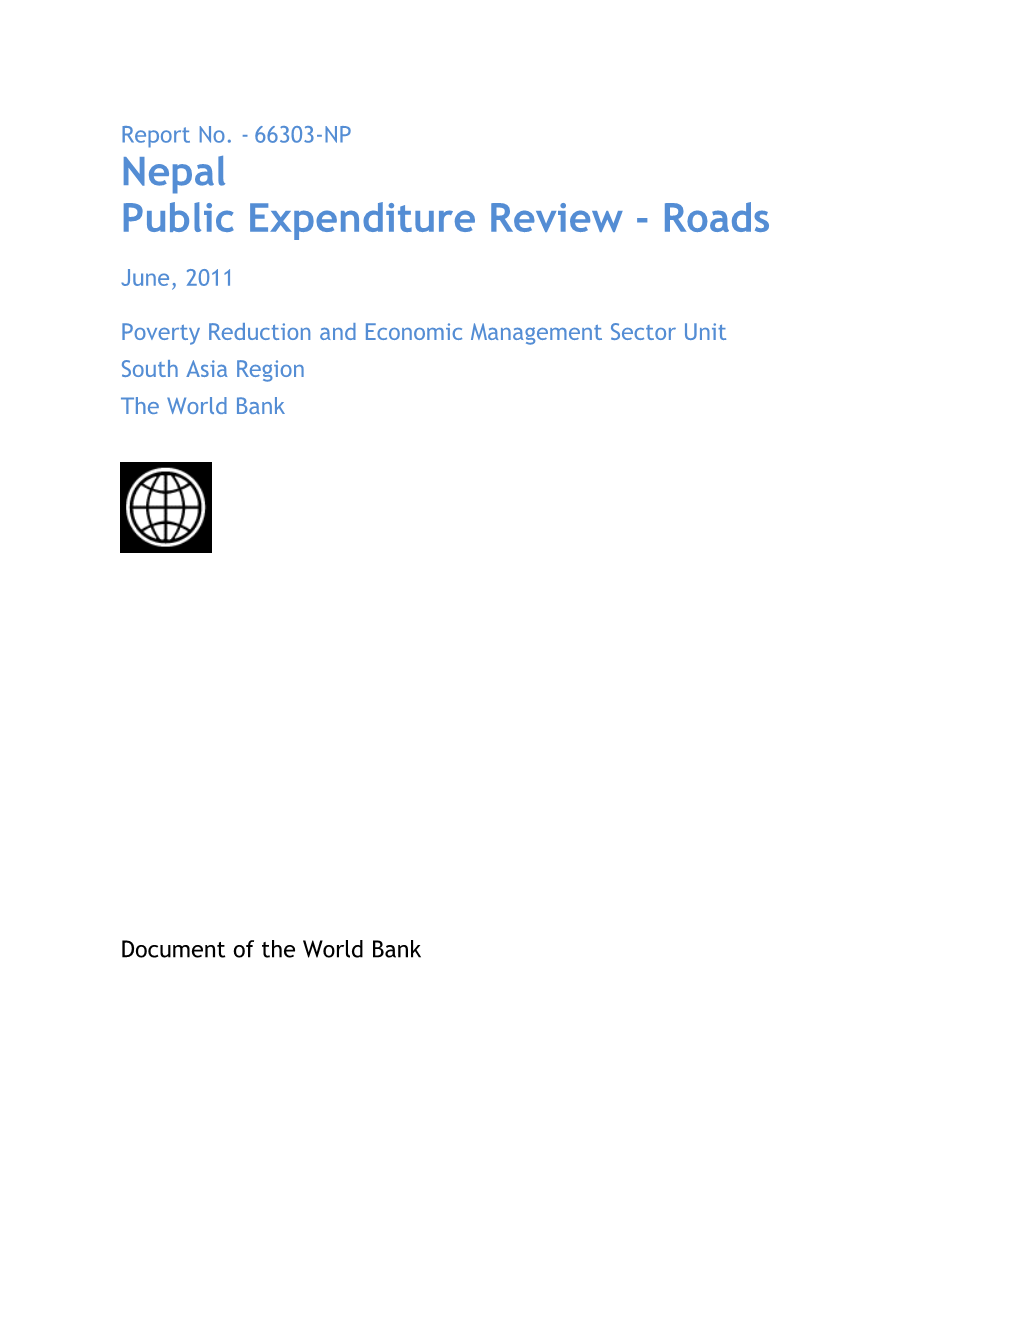 Public Expenditure Review - Roads